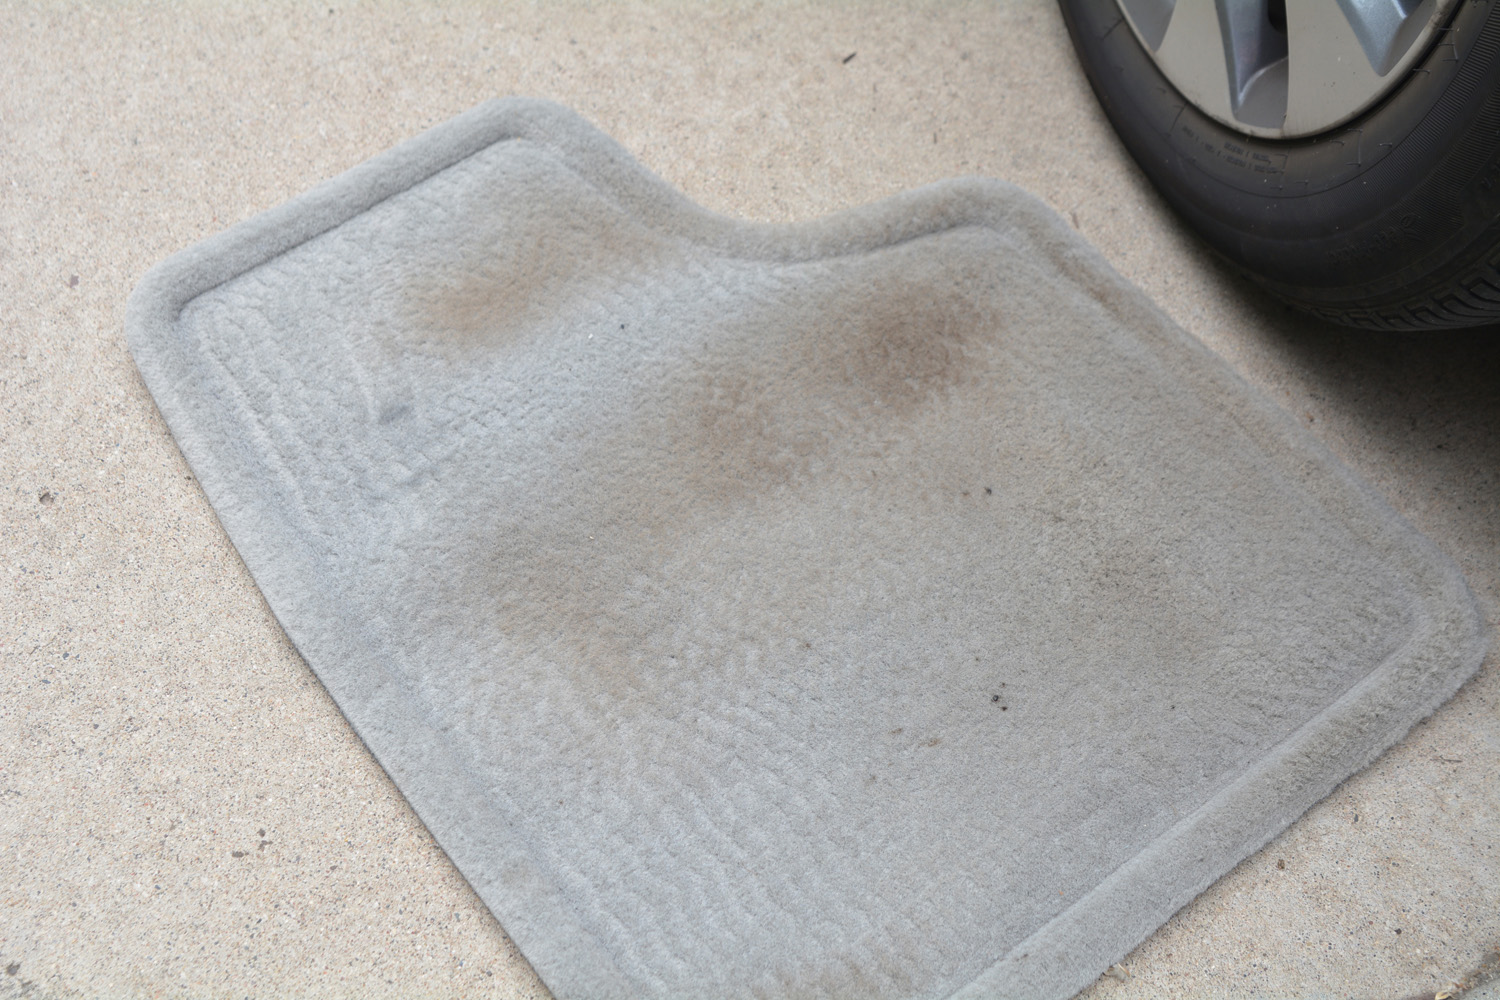 Dirty car floor mat before using Super Clean.